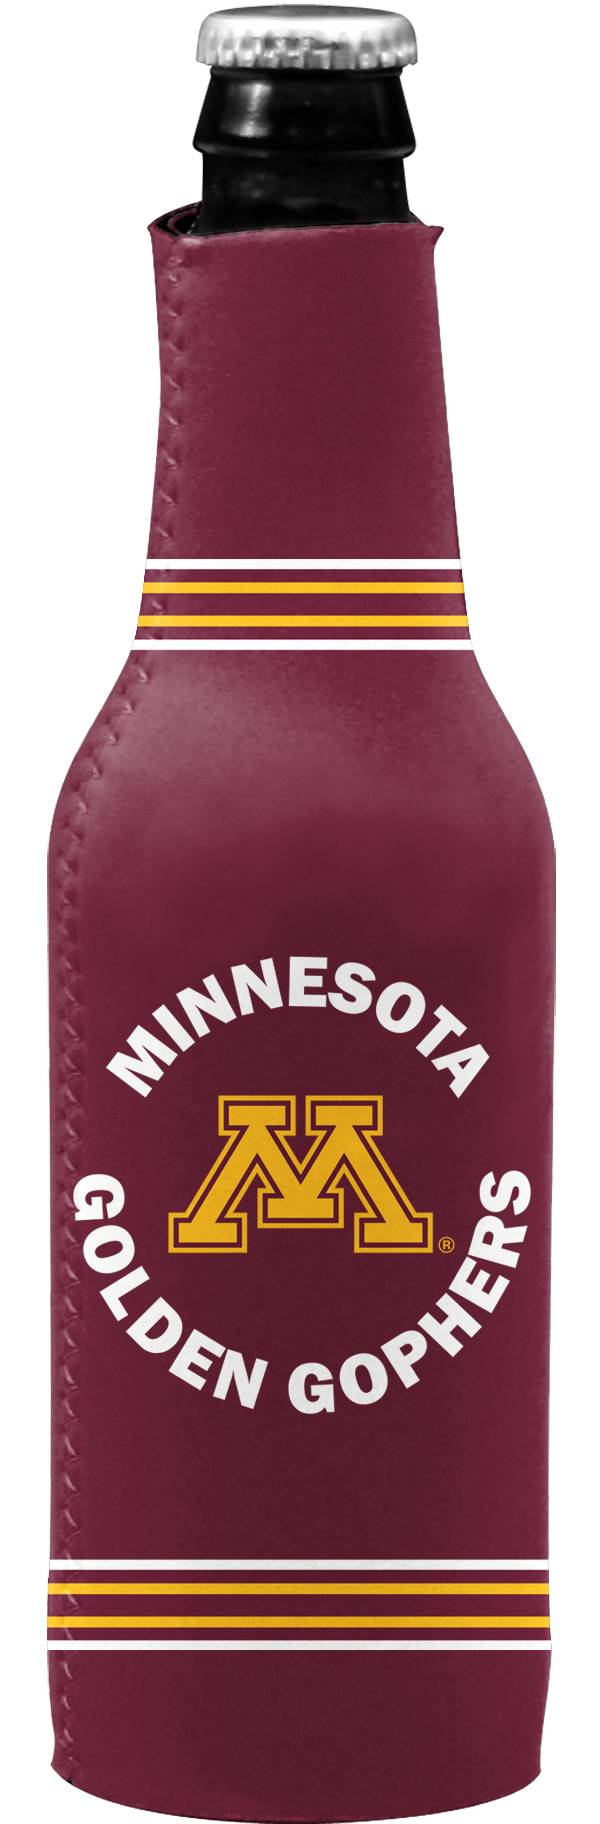 Minnesota Golden Gophers Bottle Koozie product image